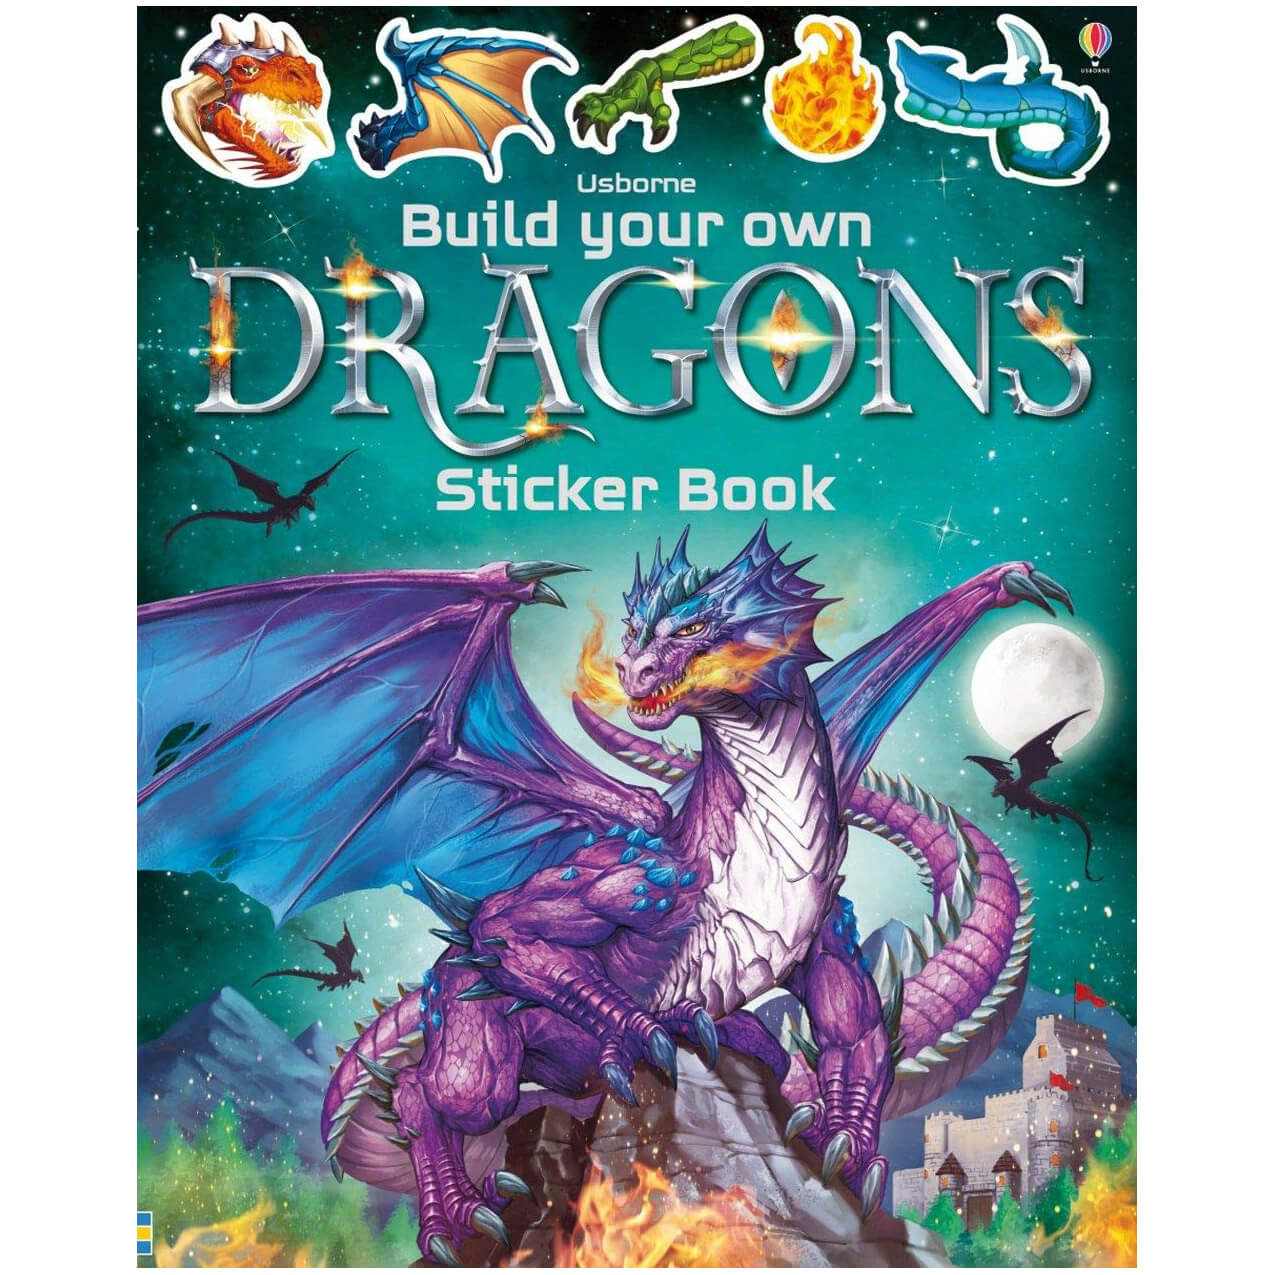 Usborne Build Your Own Dragons Sticker Book (Build Your Own Sticker Books)